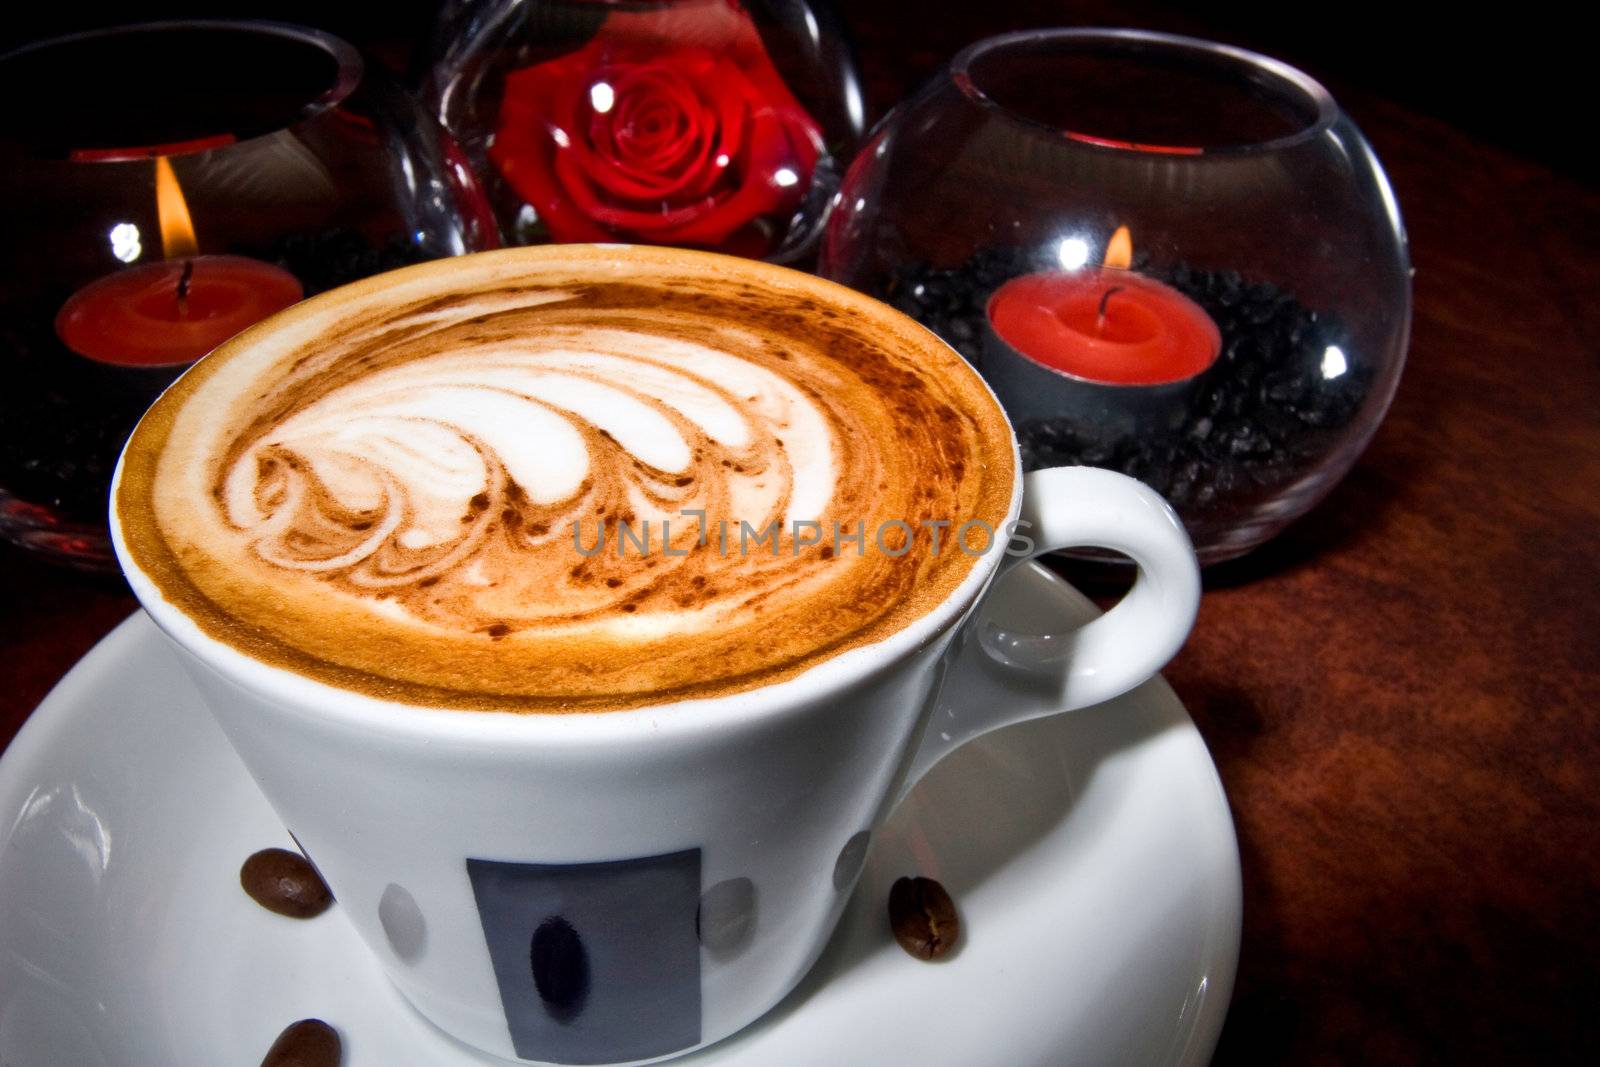 Cafe Espresso by jrstock